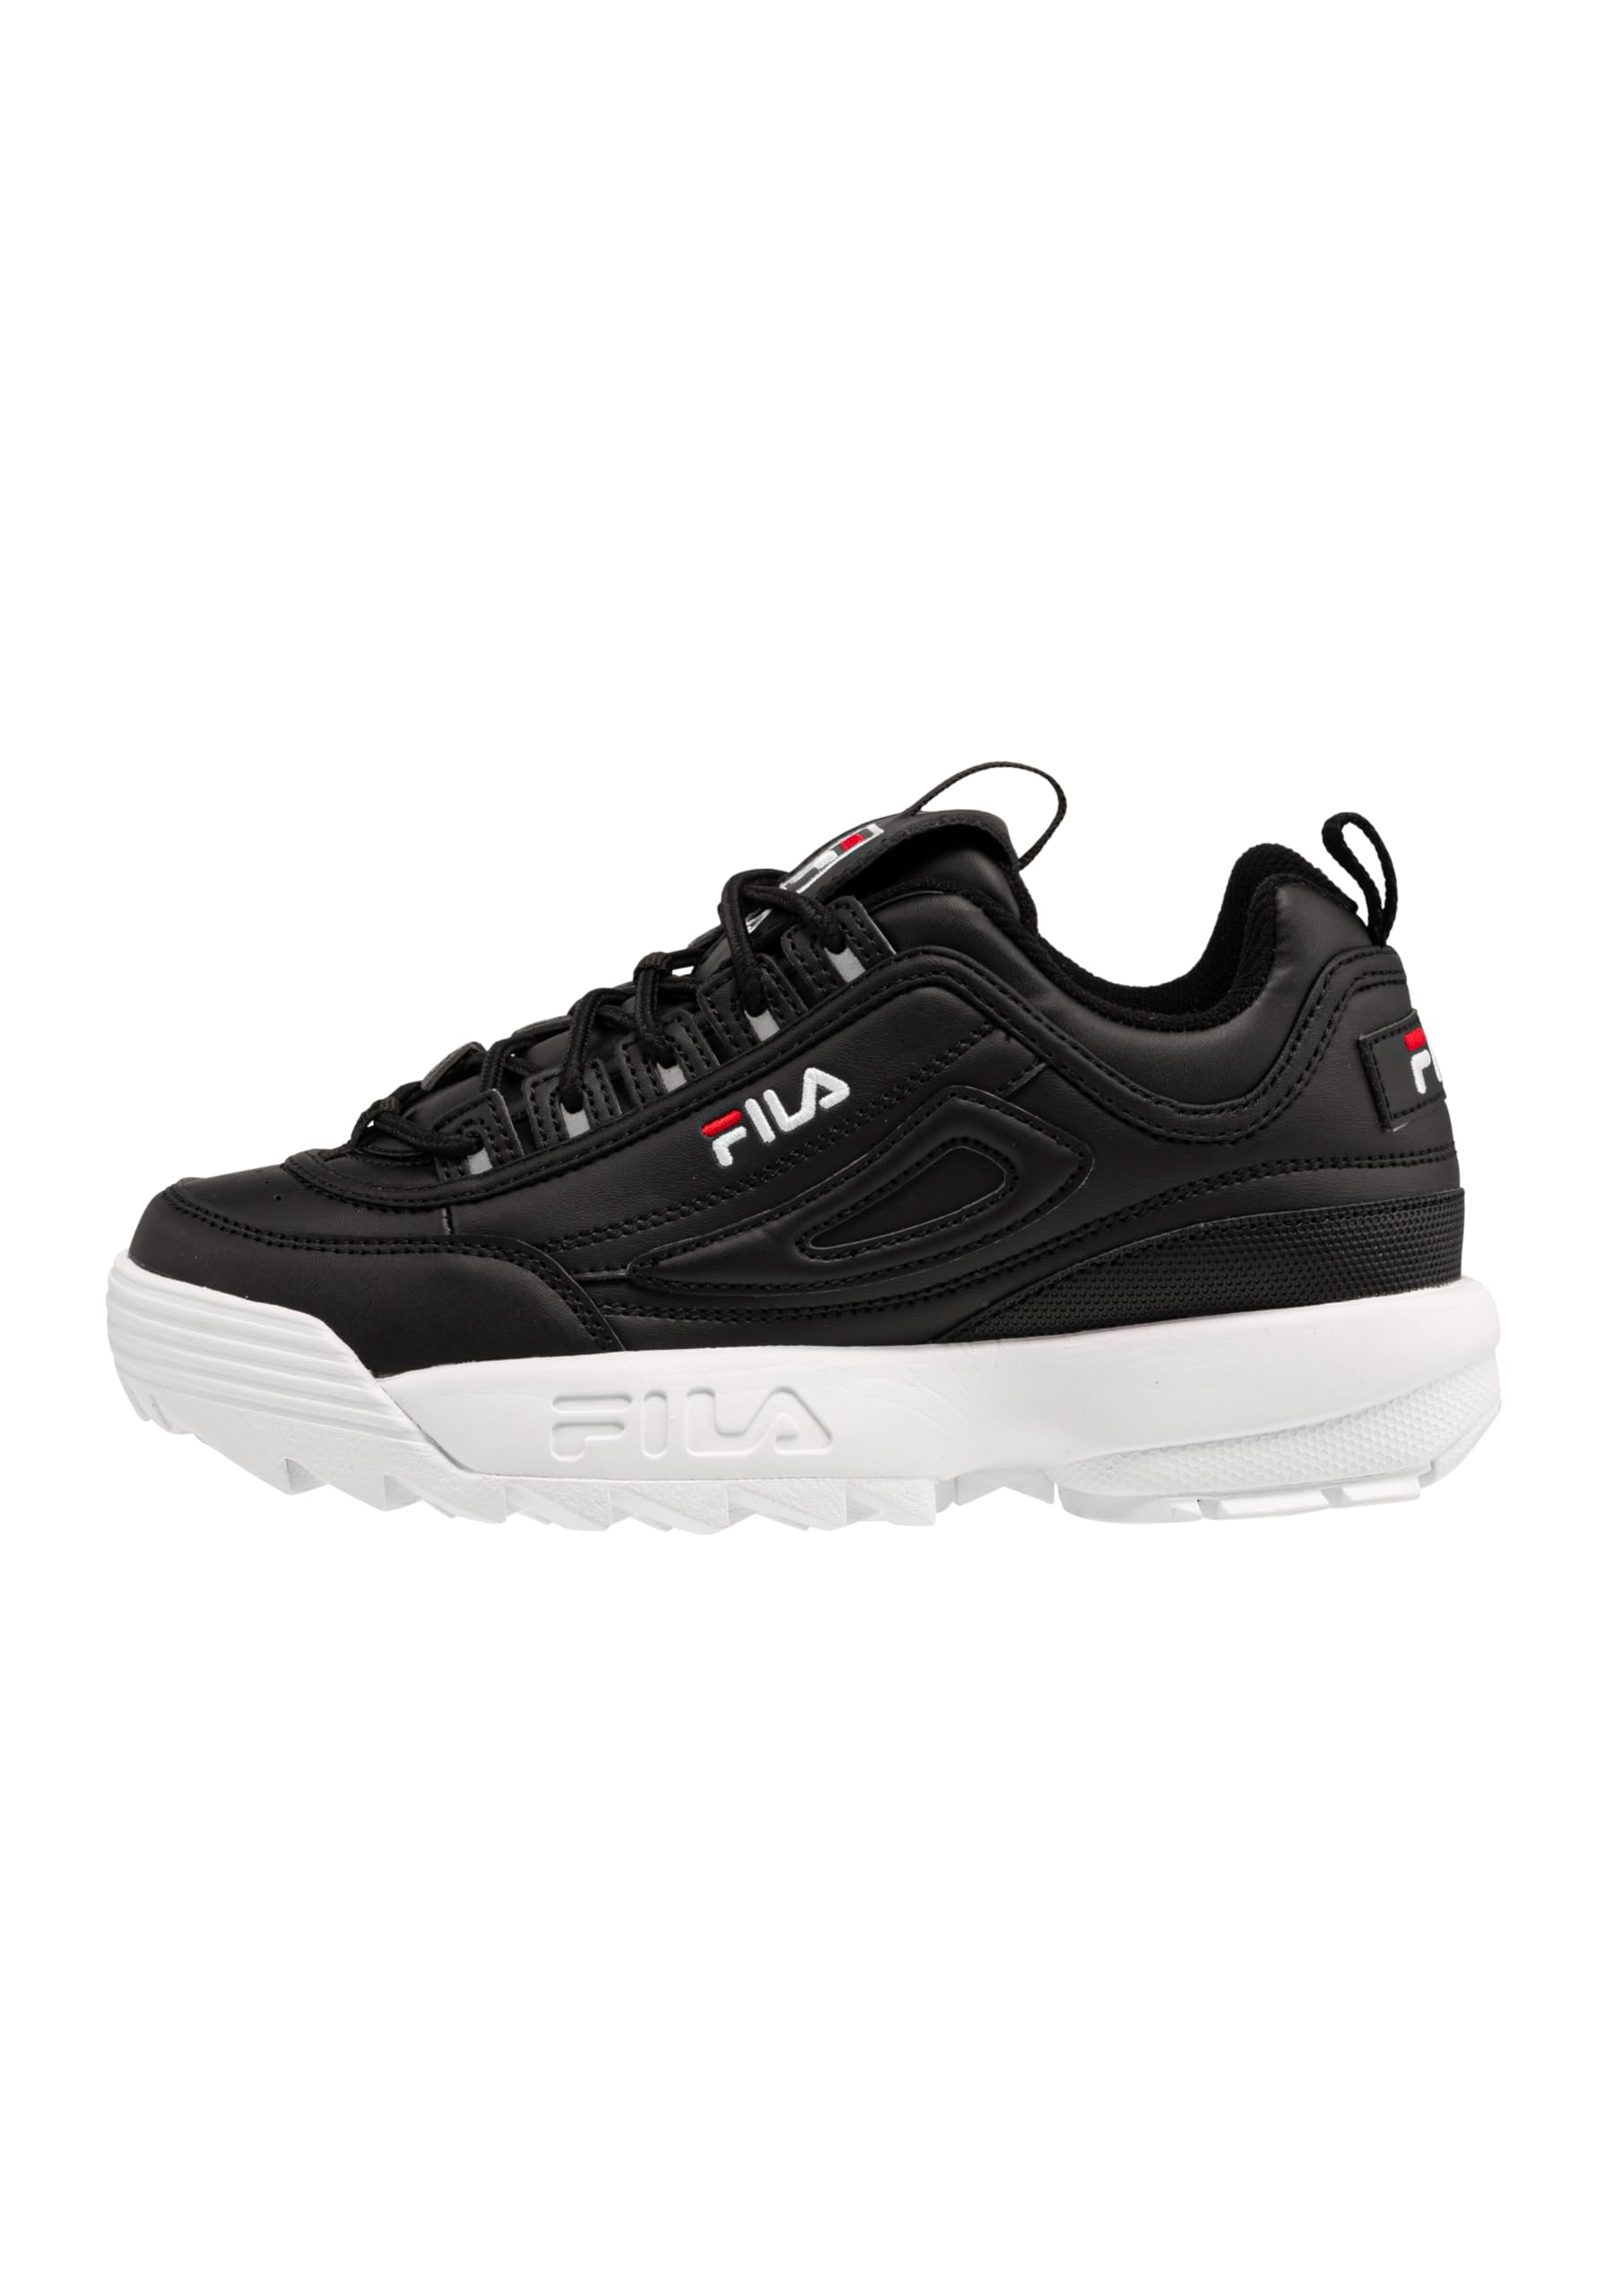 FILA Damen Disruptor wmn Sneaker, Black, 39 EU